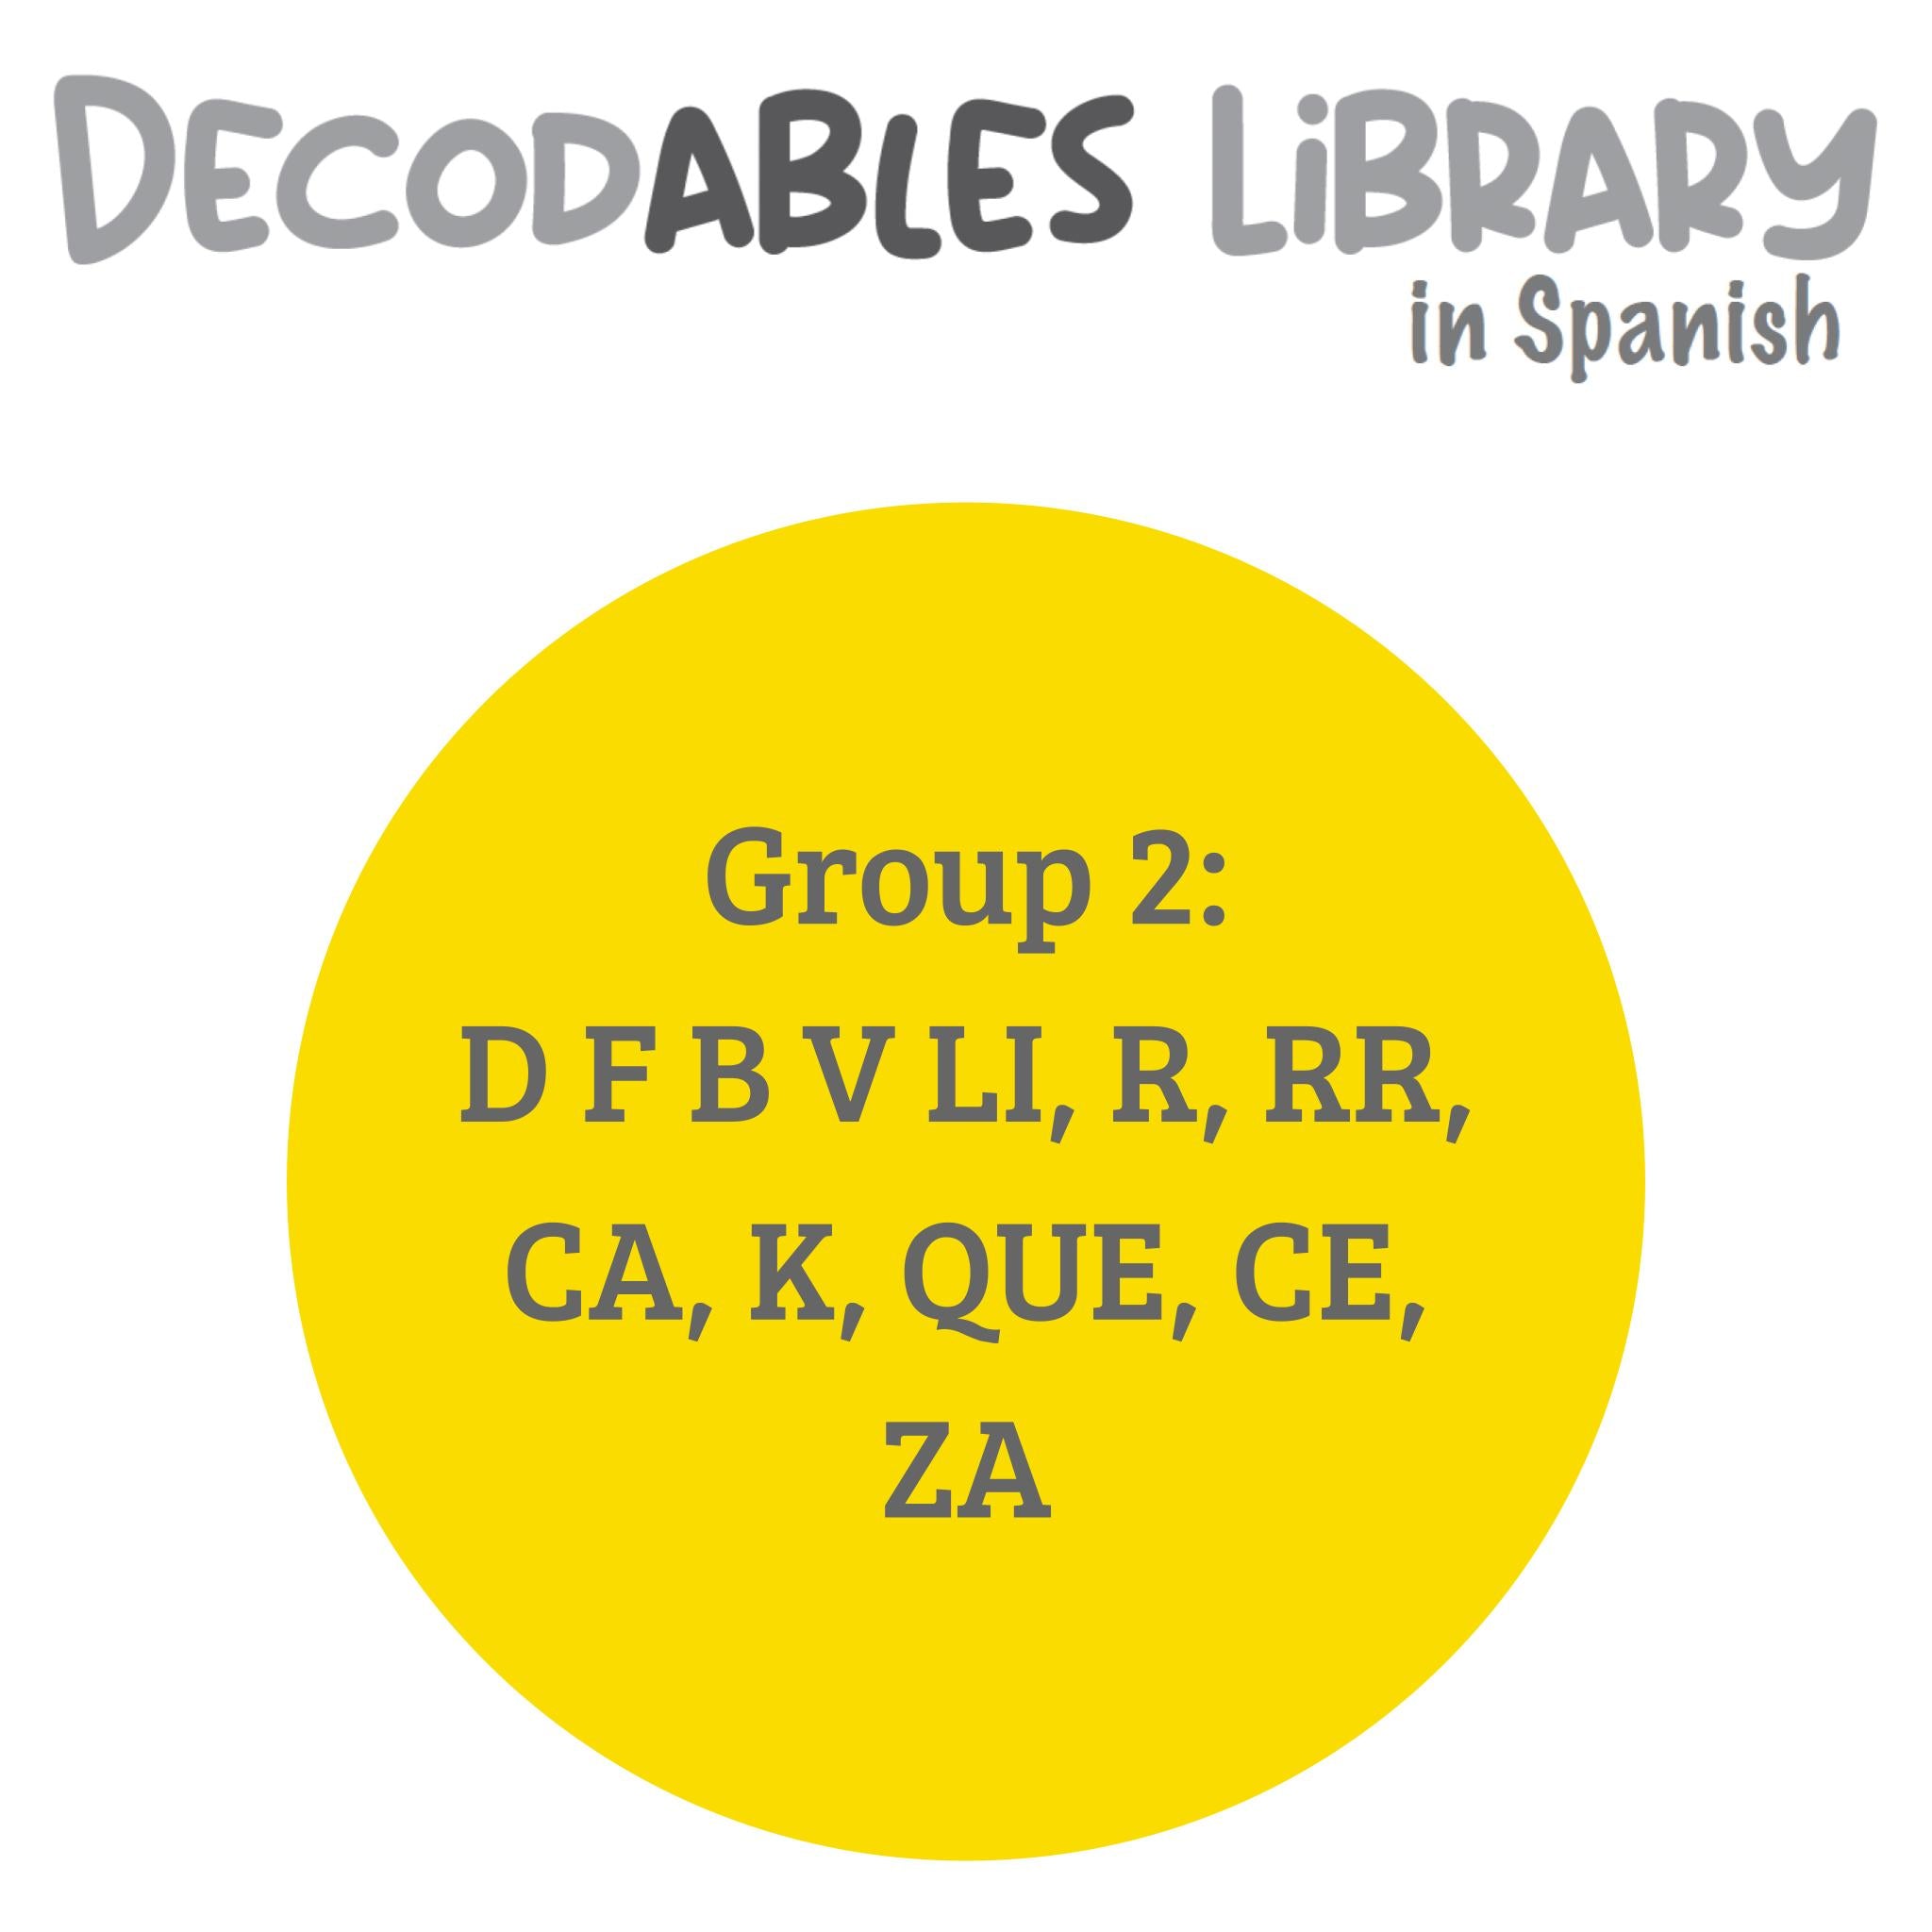 Spanish Decodables Library - Group 2: D F B V LI, R, RR, CA, K, QUE, CE, ZA (set of 9 titles)